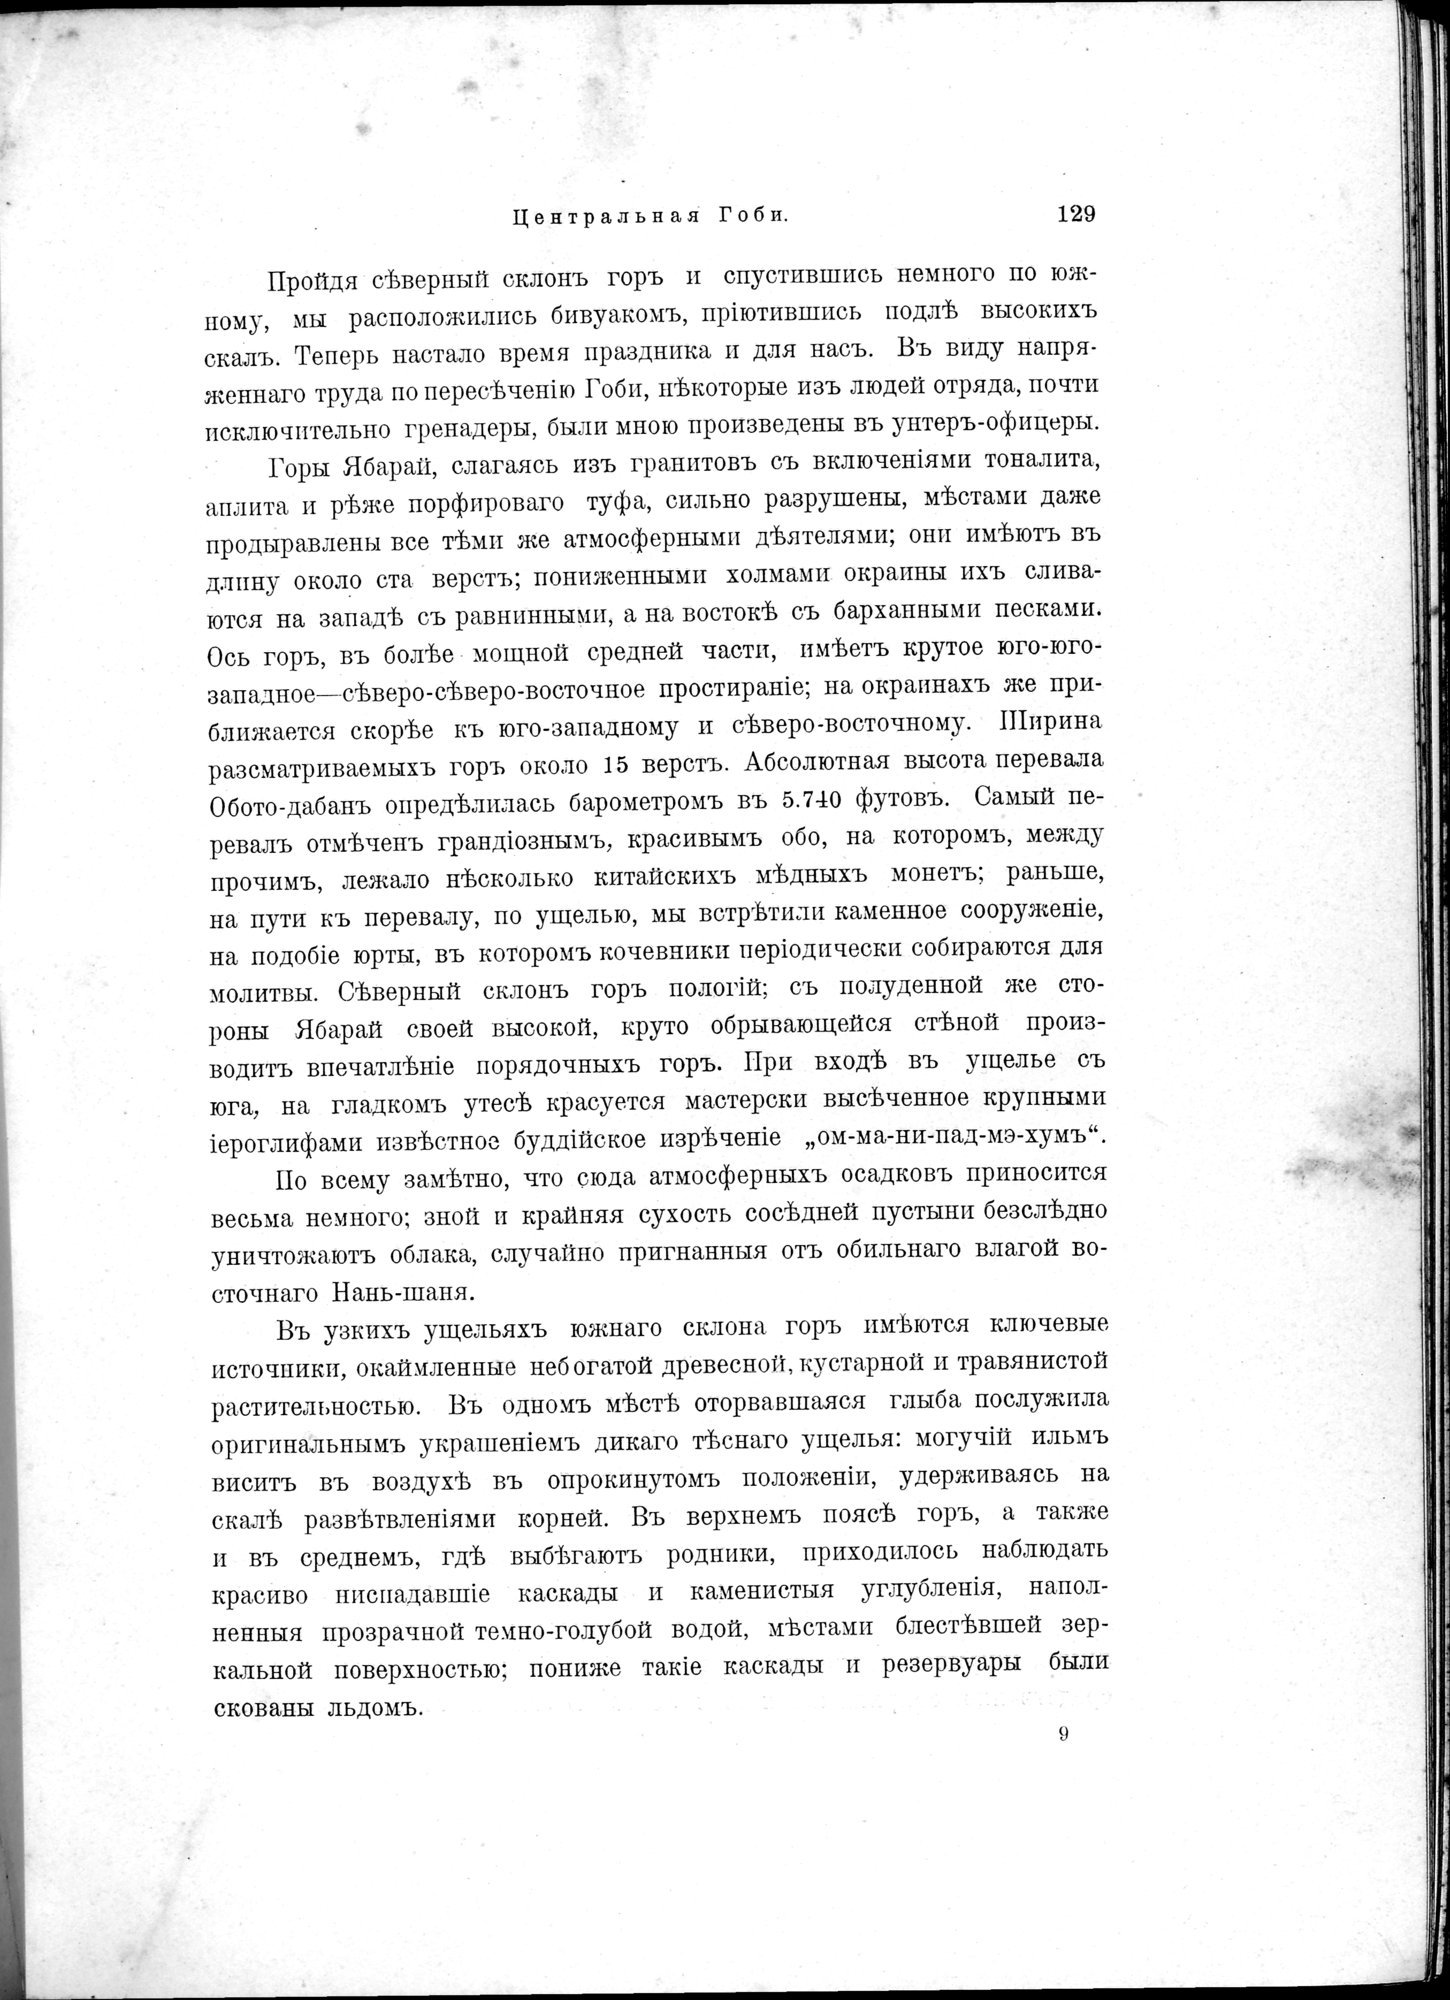 Mongoliia i Kam : vol.1 / Page 165 (Grayscale High Resolution Image)